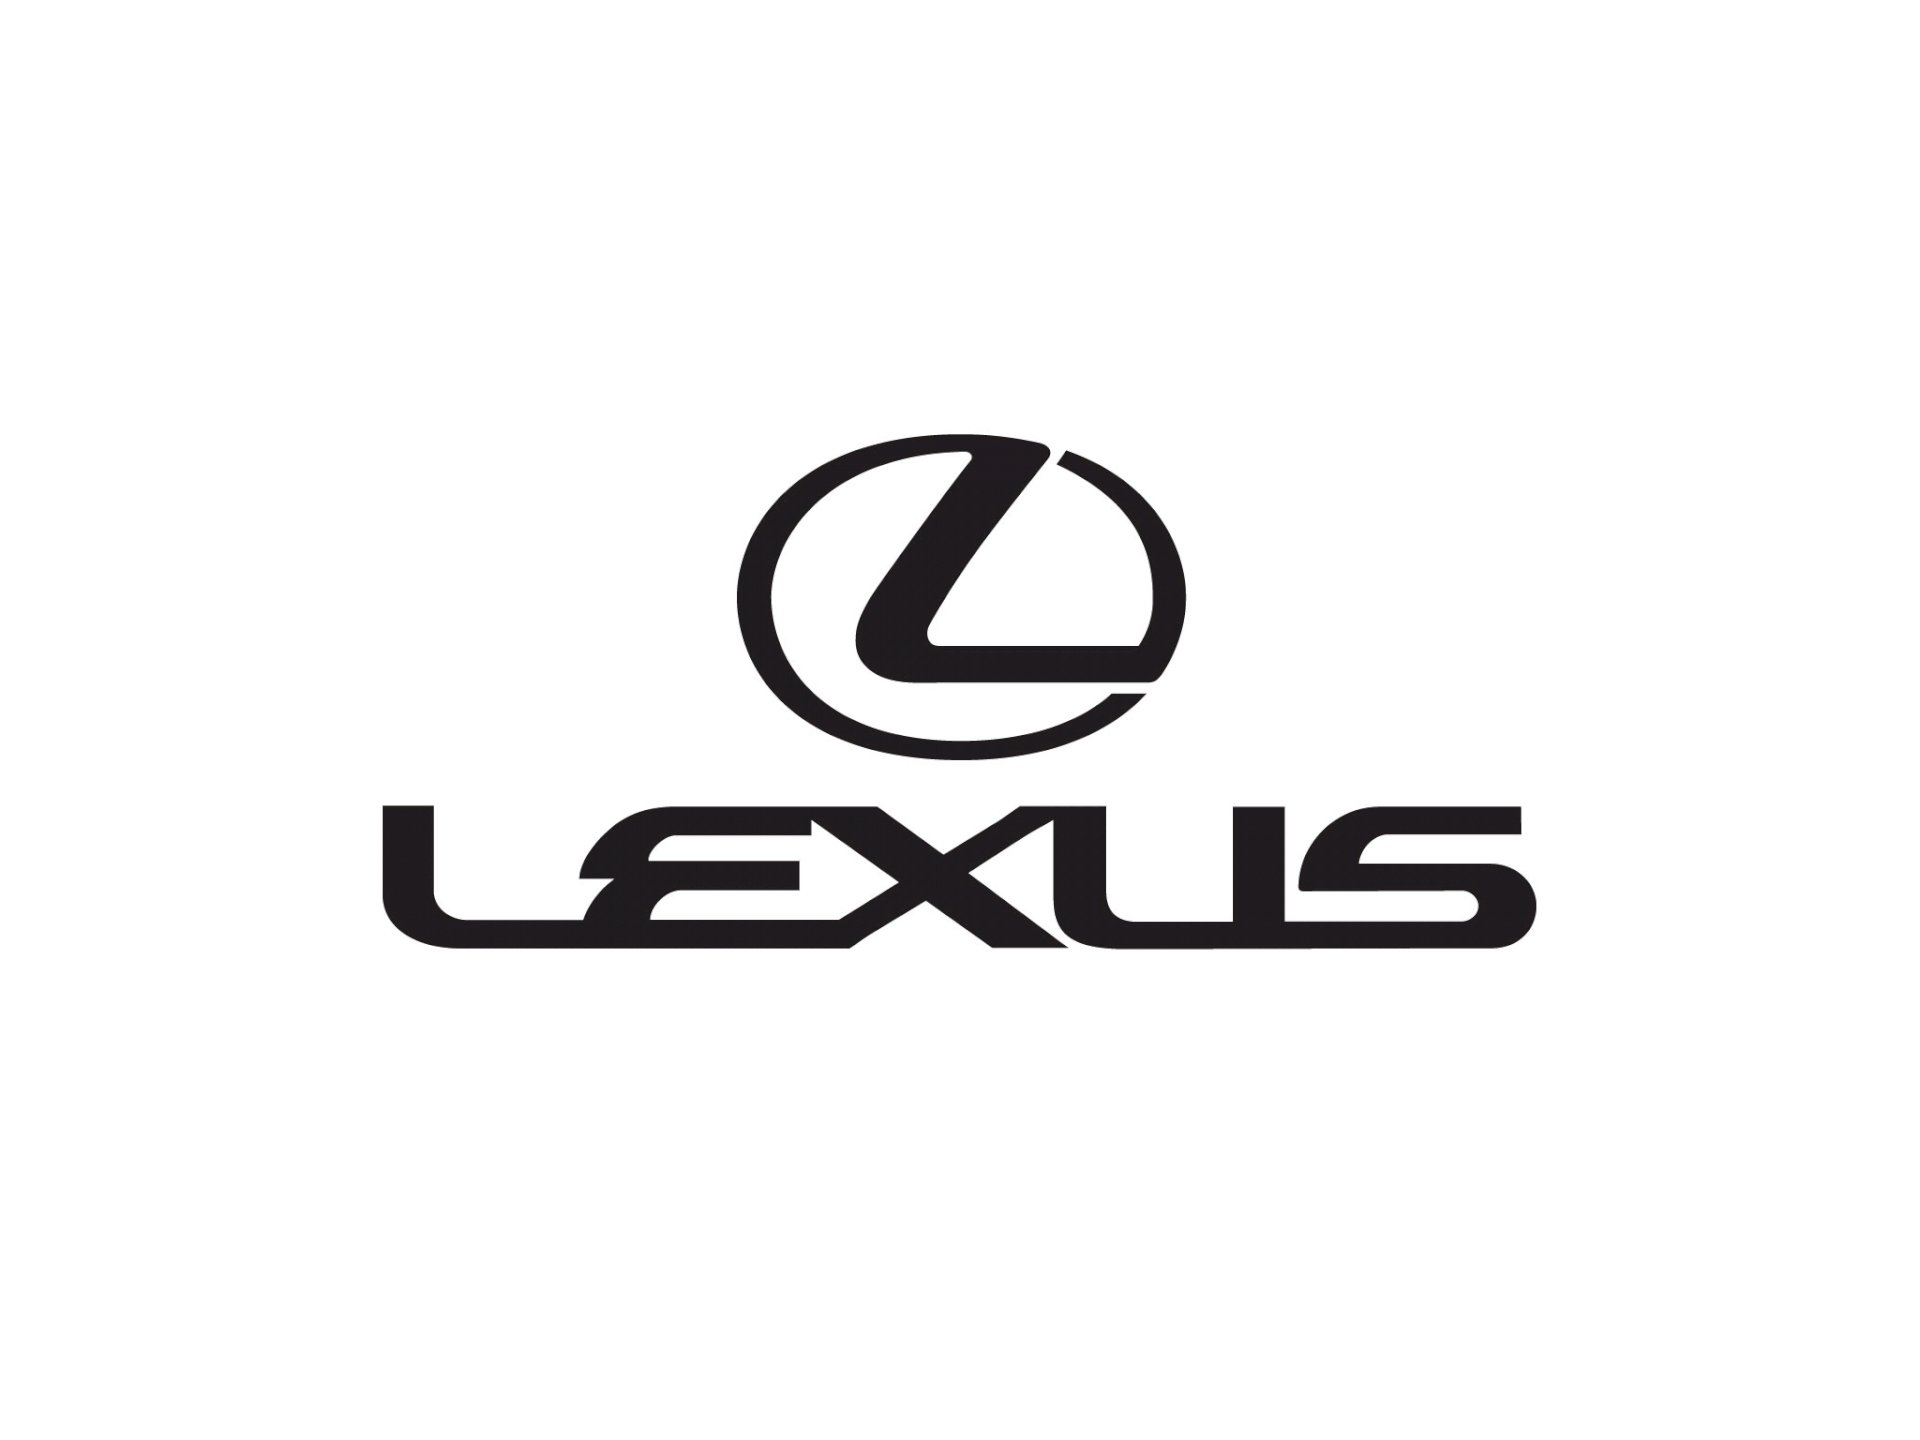 Tải logo Lexus PNG, vector file AI, CDR, EPS, SVG, PDF miễn phí